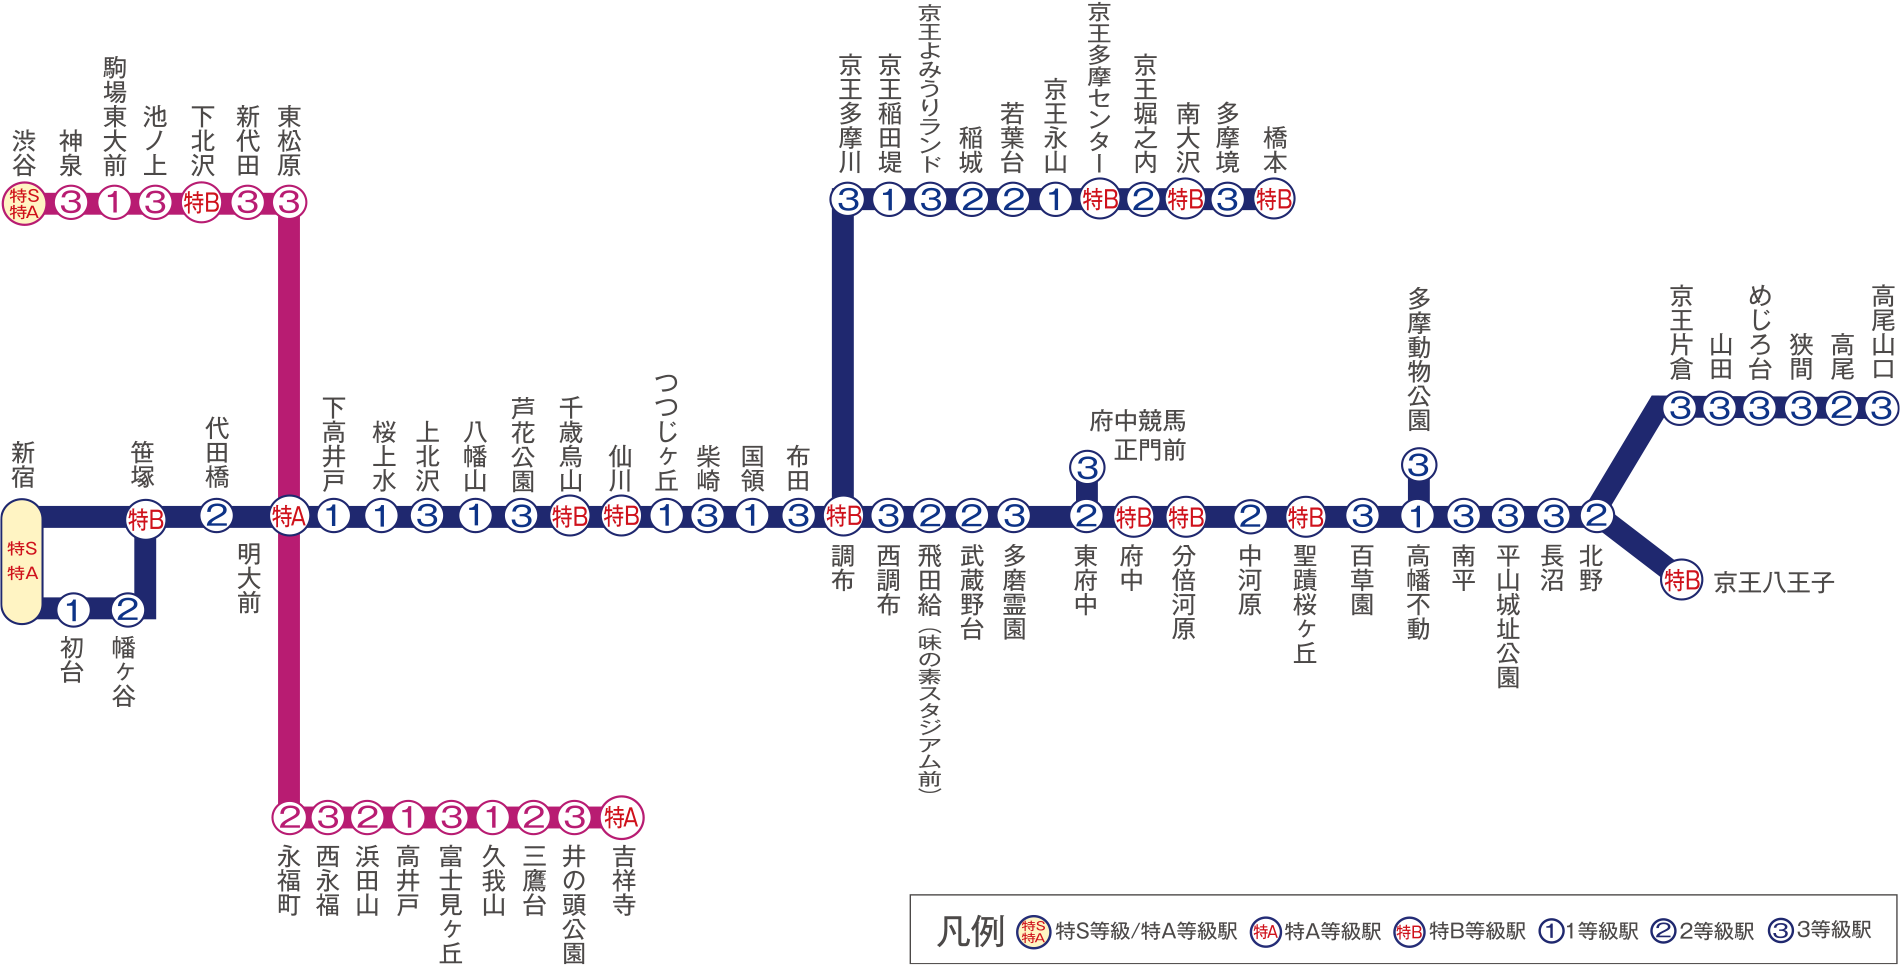 京王線・井の頭線 路線図・駅図 | KEIO MEDIA-京王線・井の頭線の交通広告